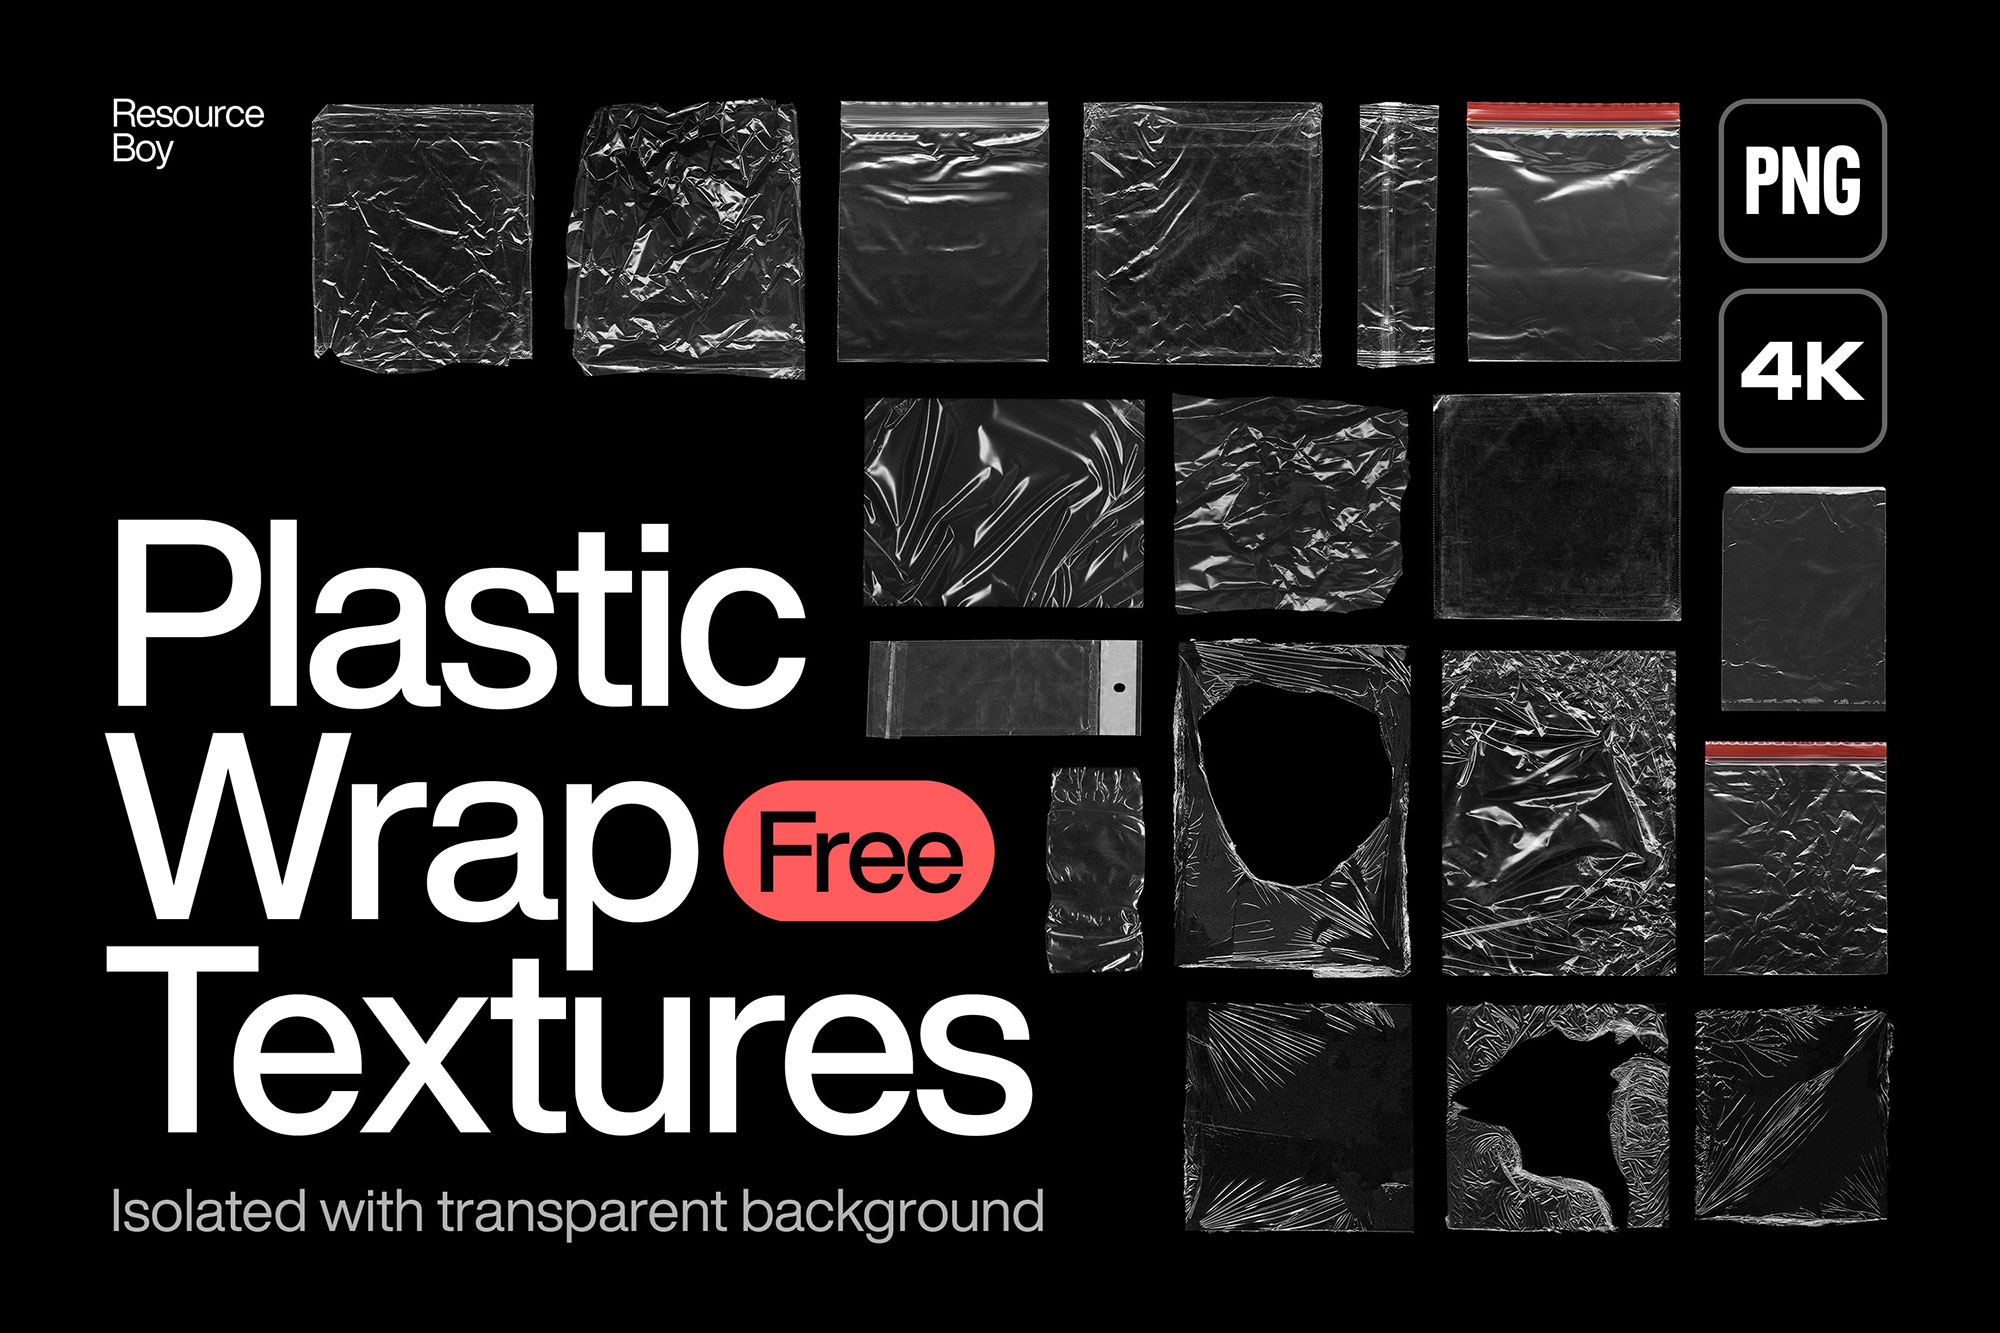 120 Free Plastic Wrap Textures (High Resolution) - Resource Boy